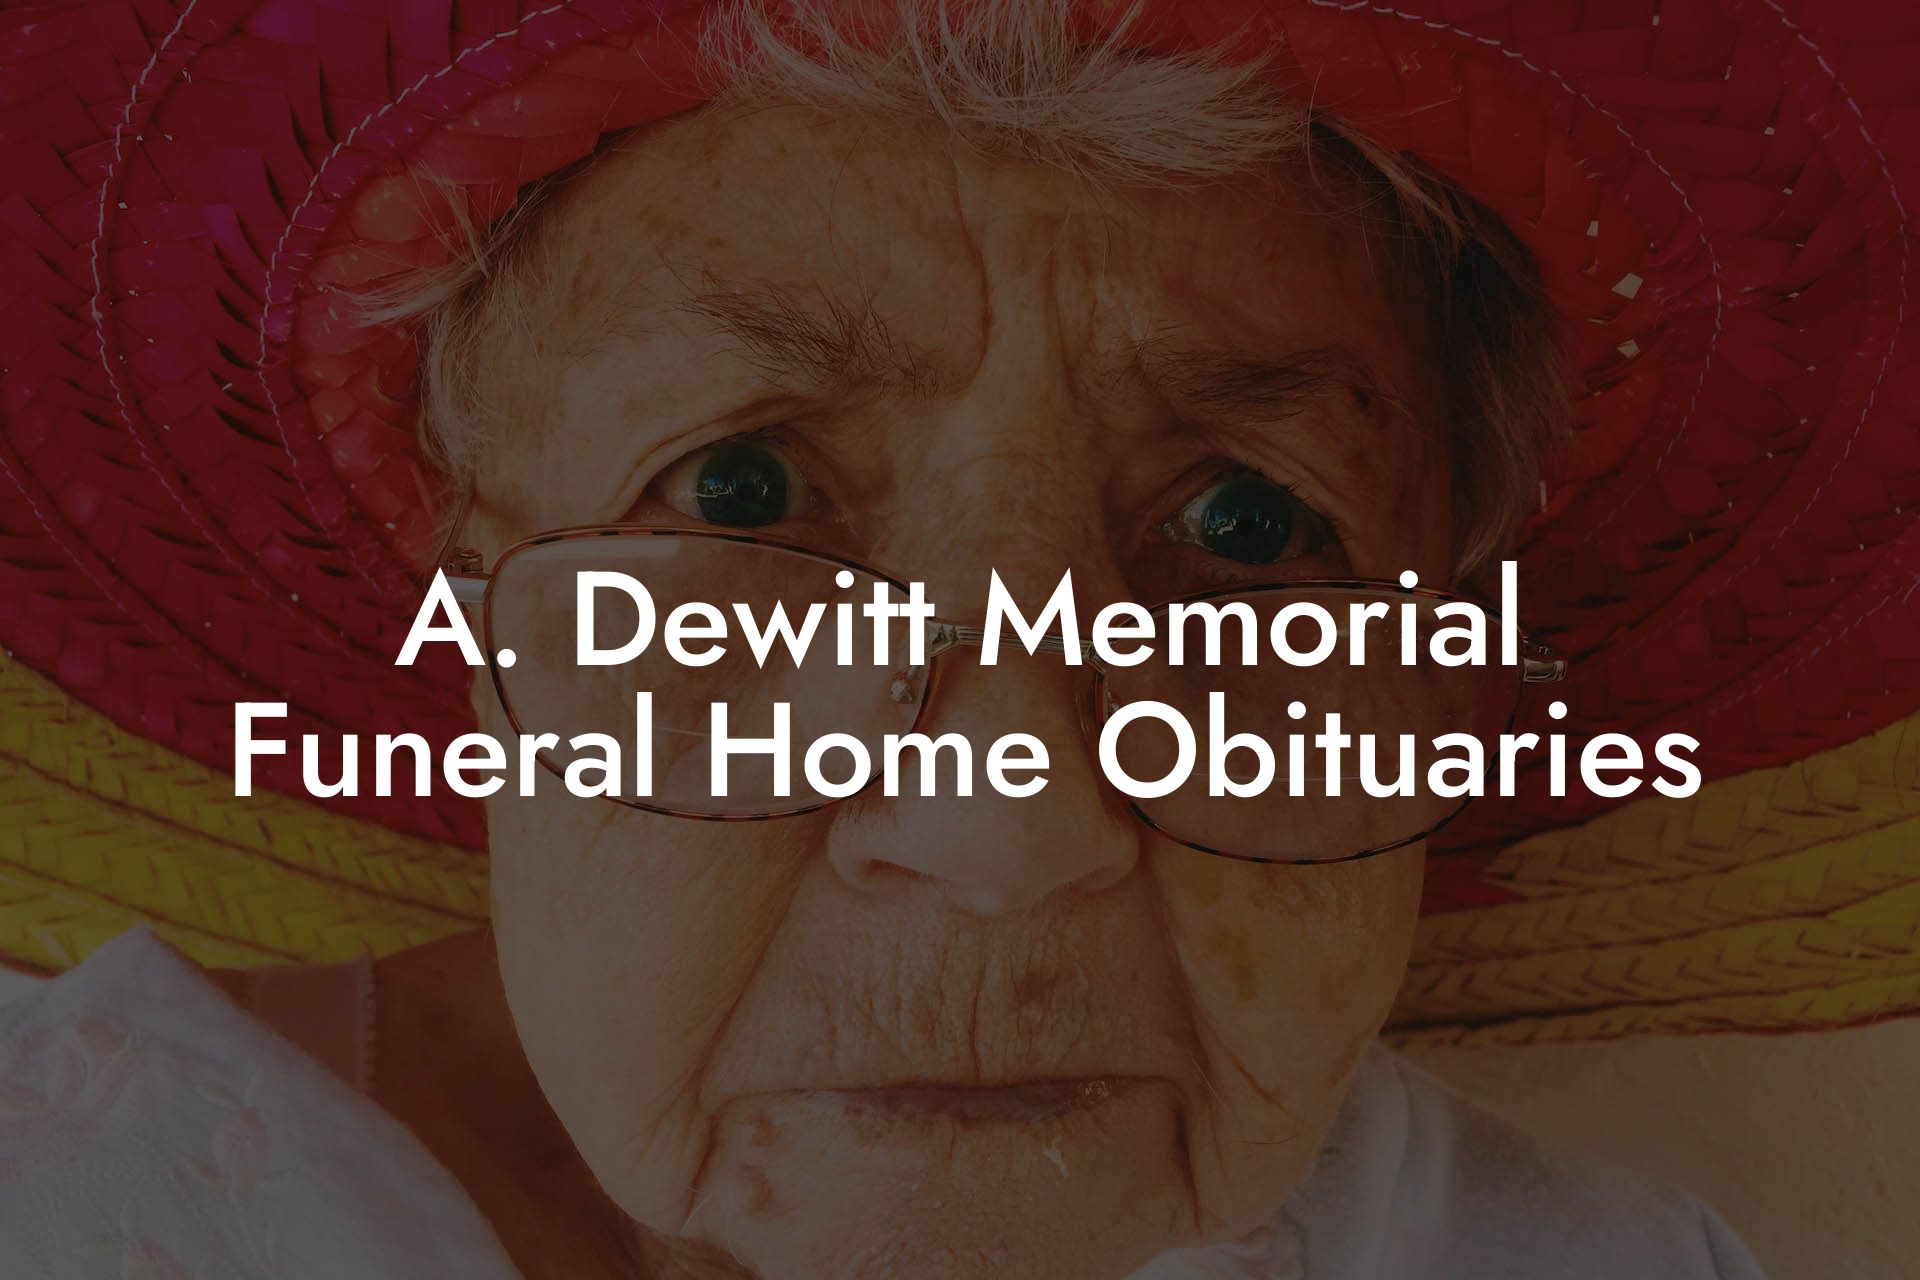 A. Dewitt Memorial Funeral Home Obituaries